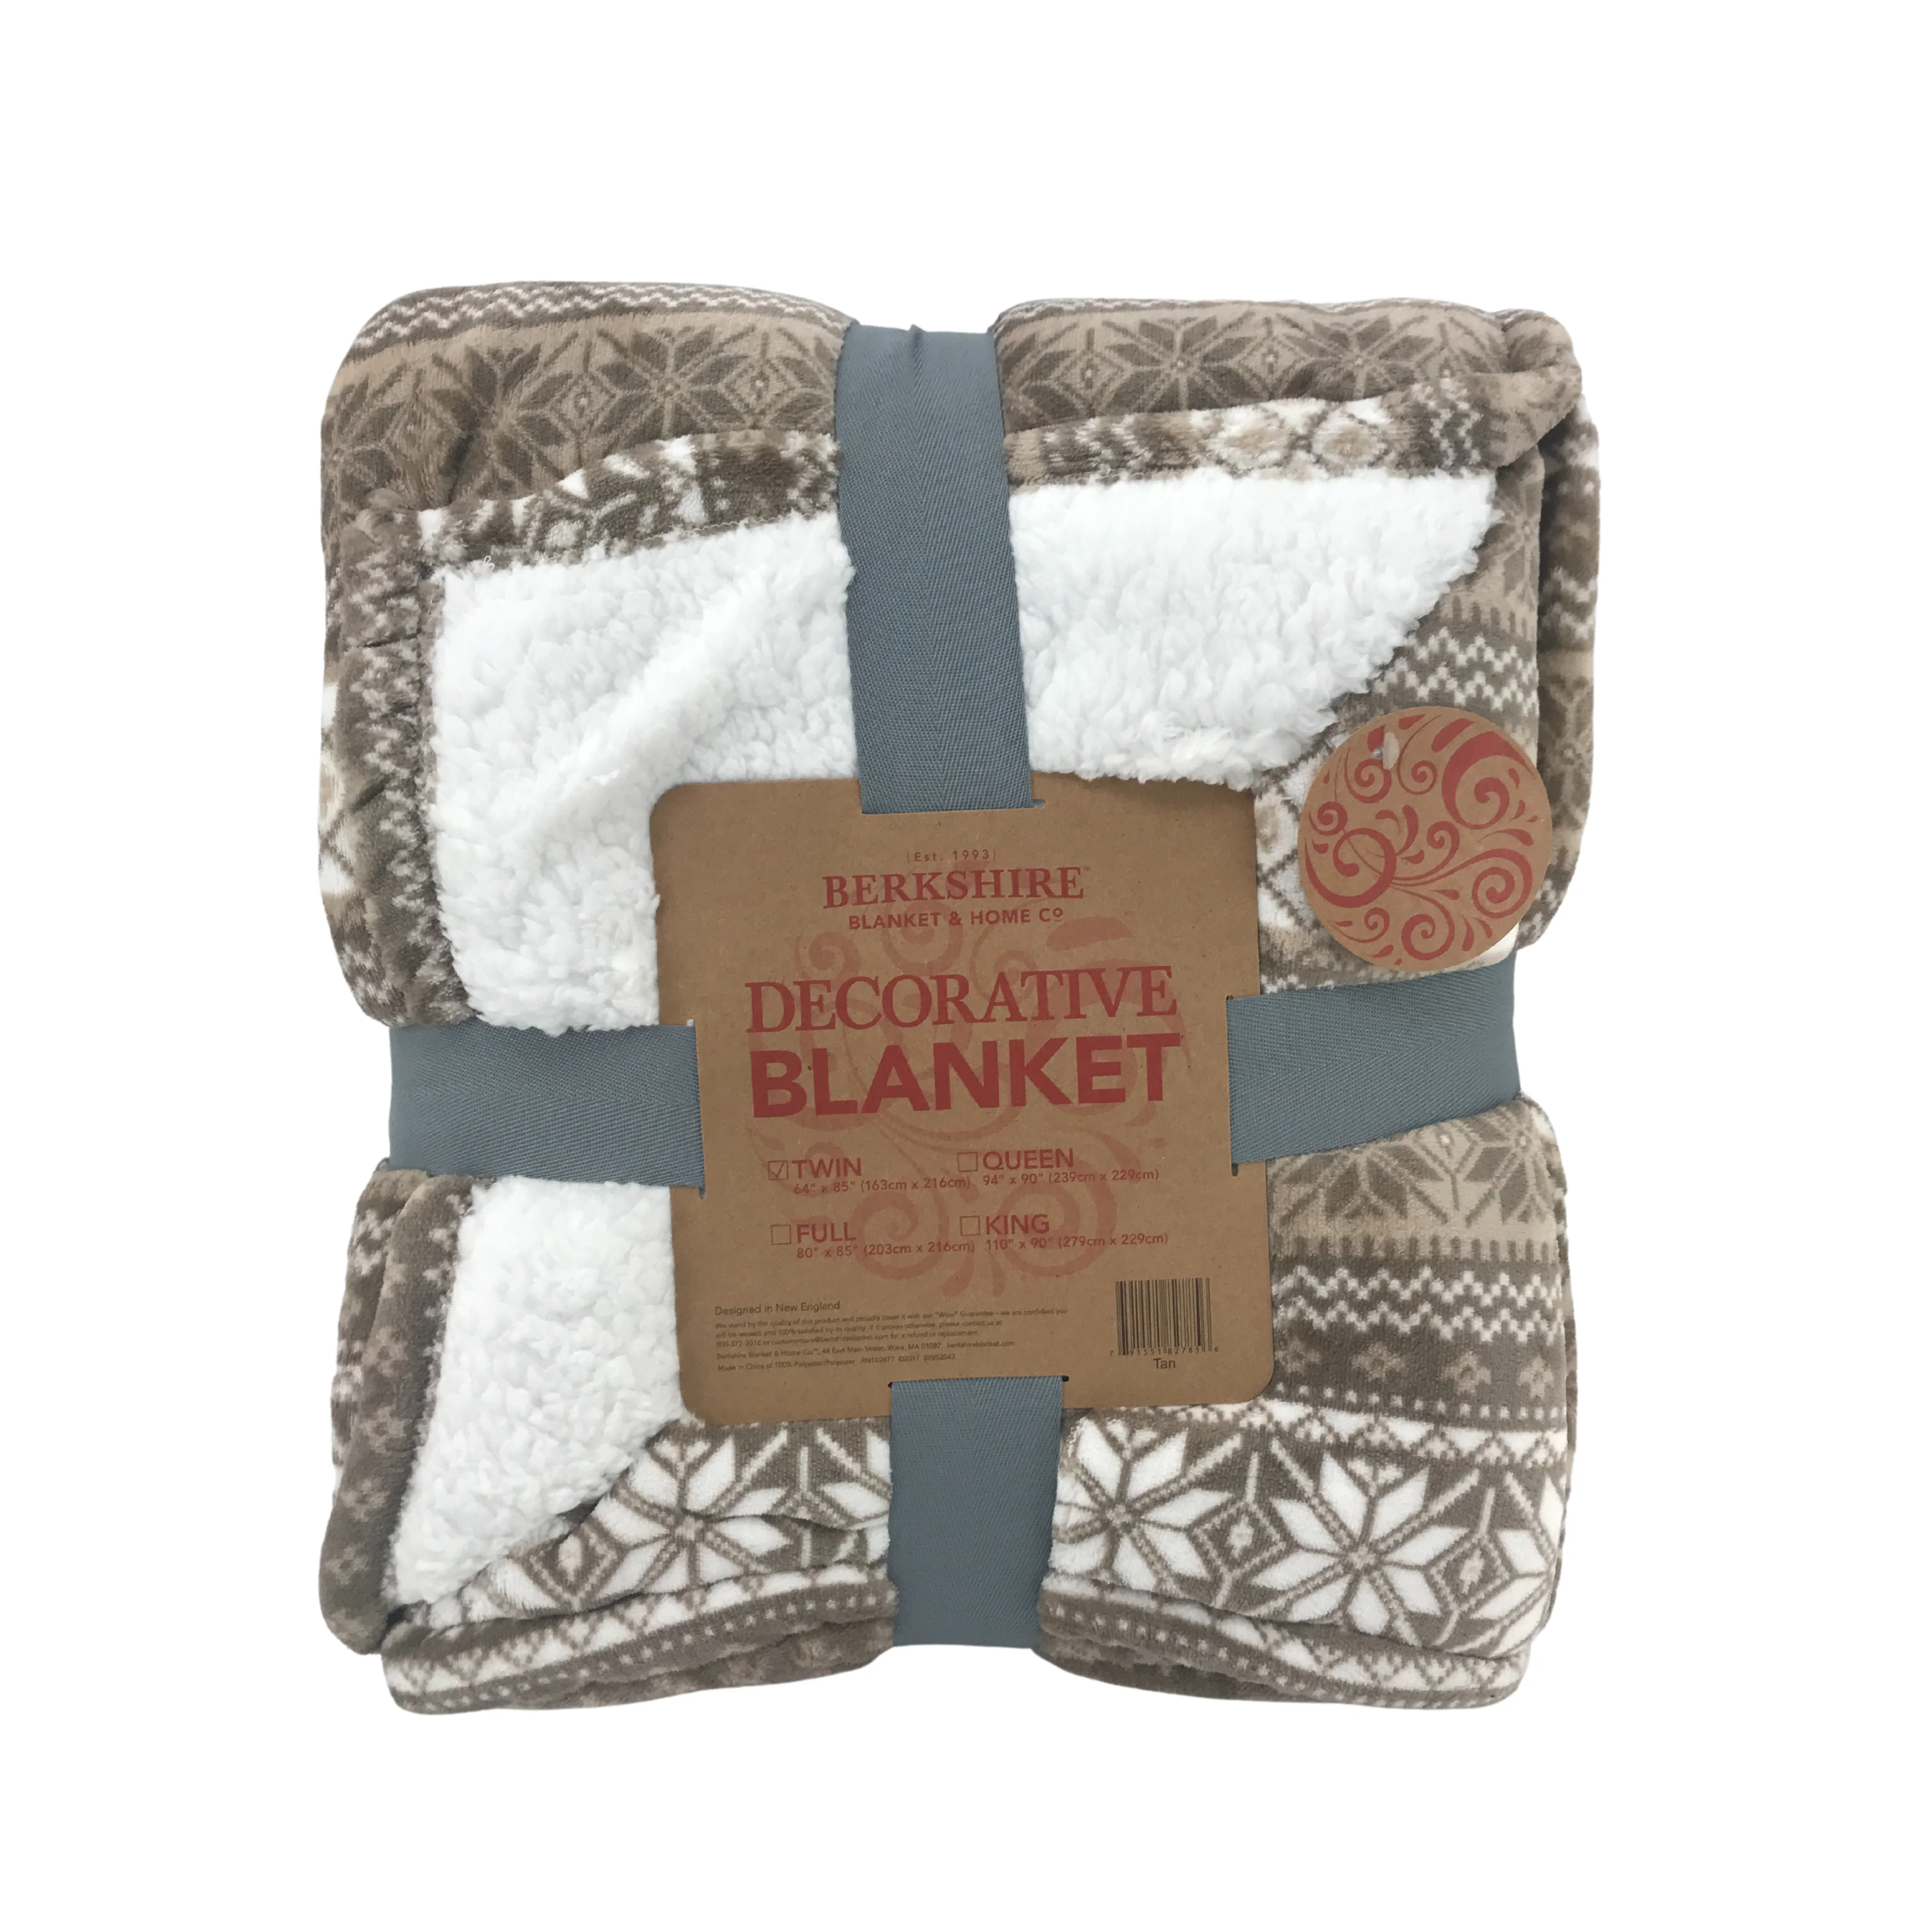 Berkshire Decorative Blanket / Tan / White / Full / Throw Blanket / Snowflake Design